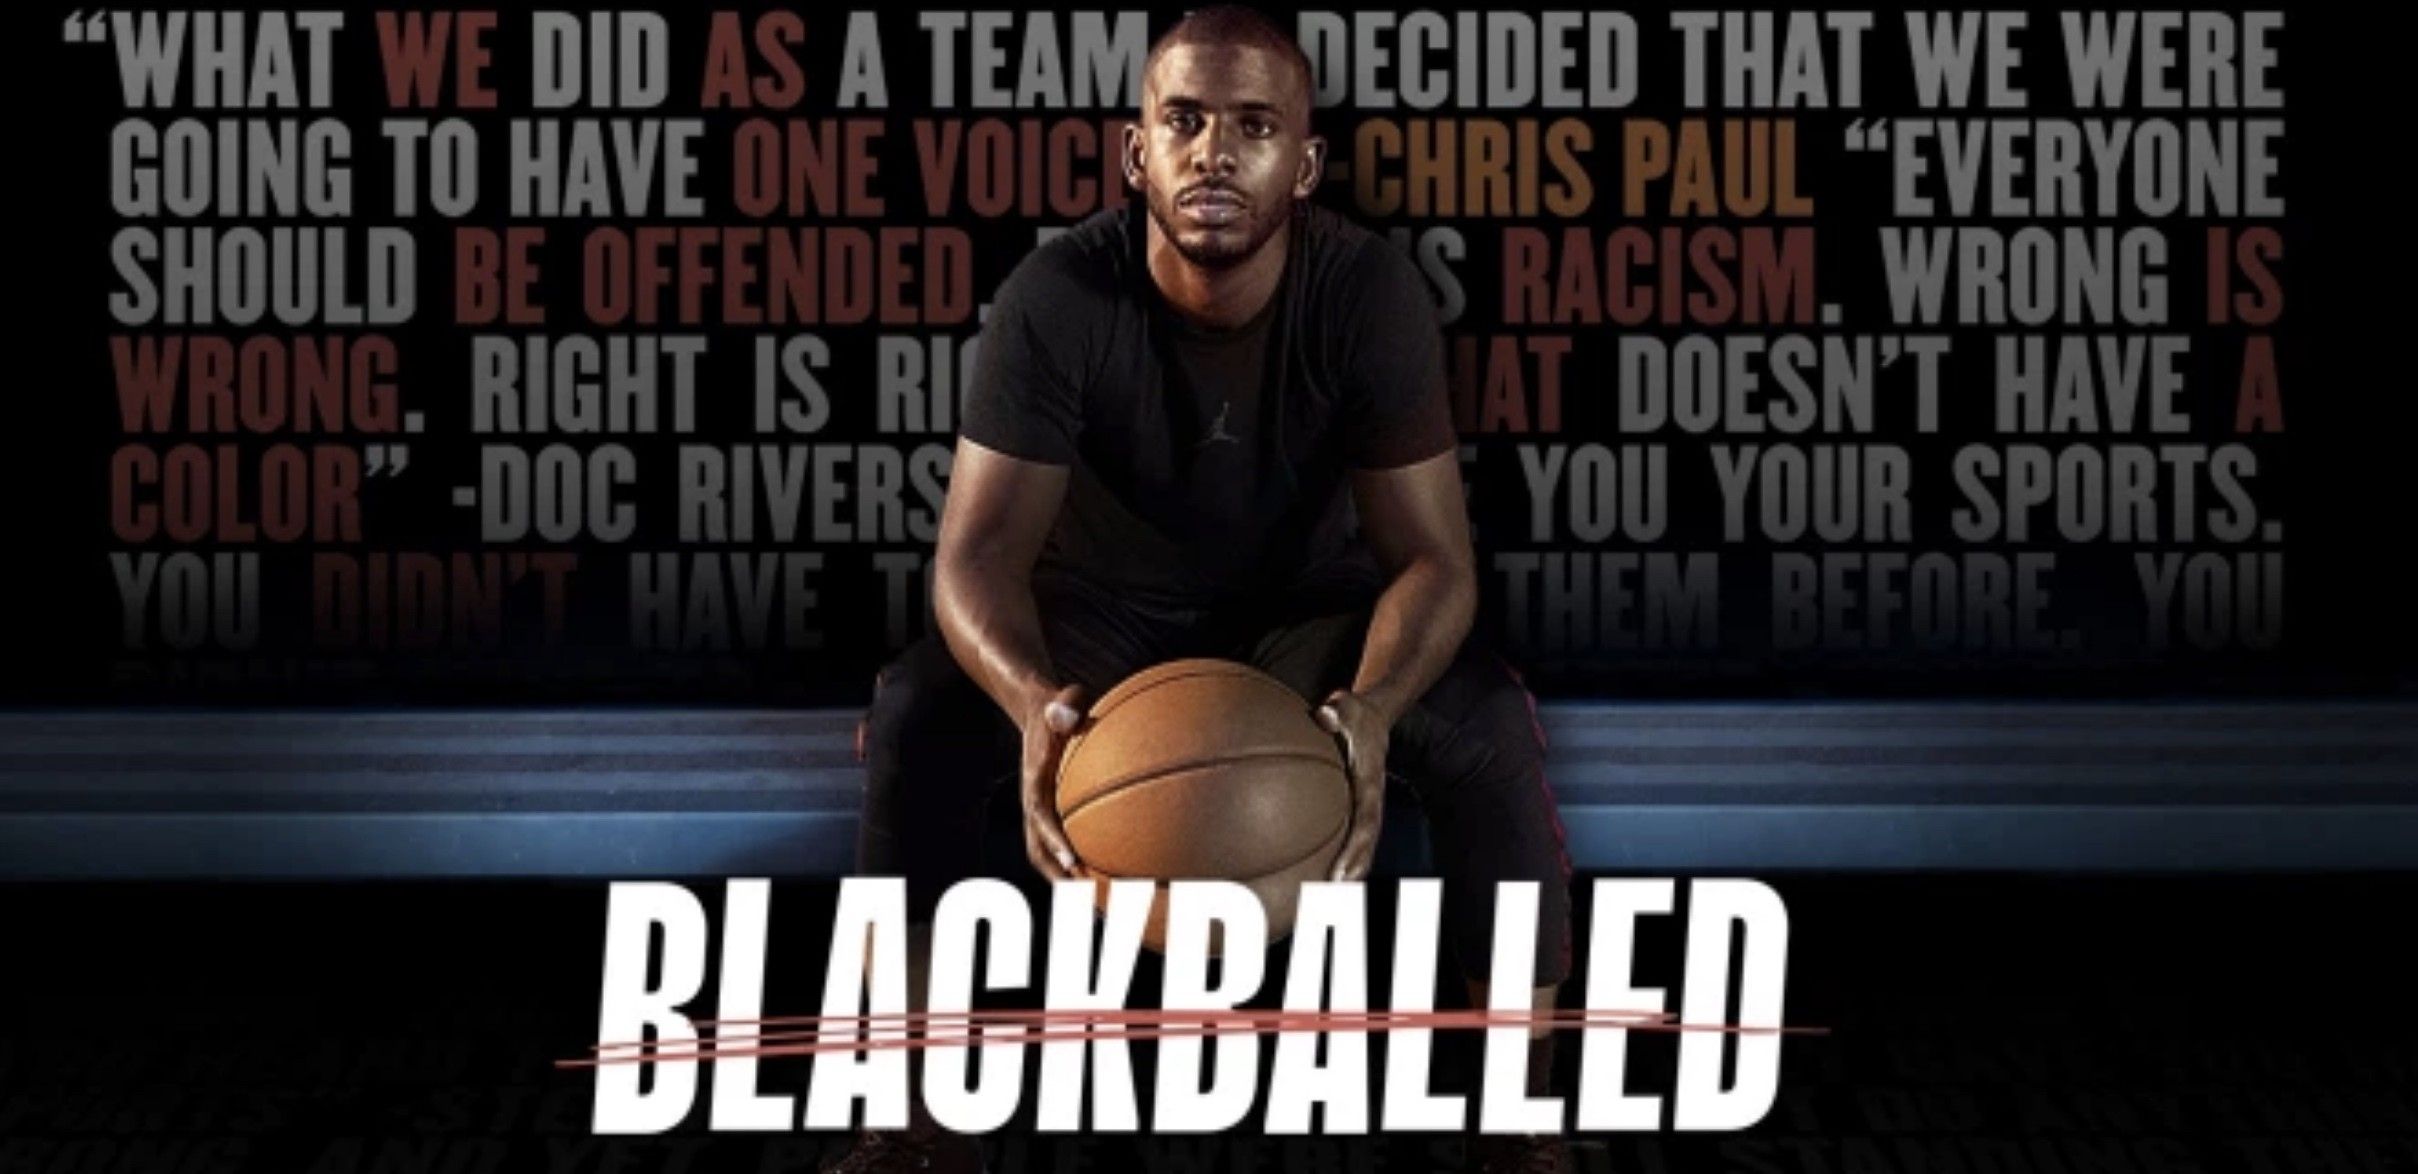 Blackballed Interview No Film School Podcast